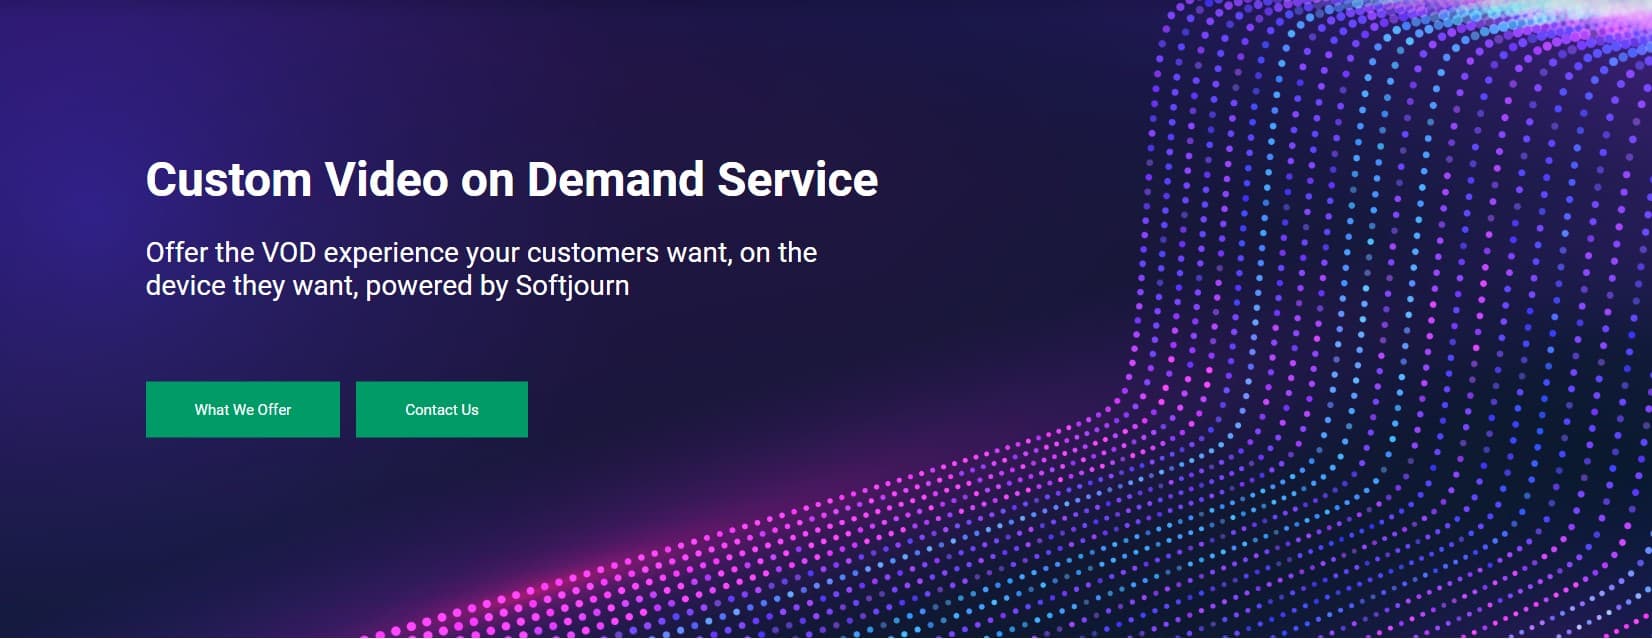 Custom Video on Demand Service Development